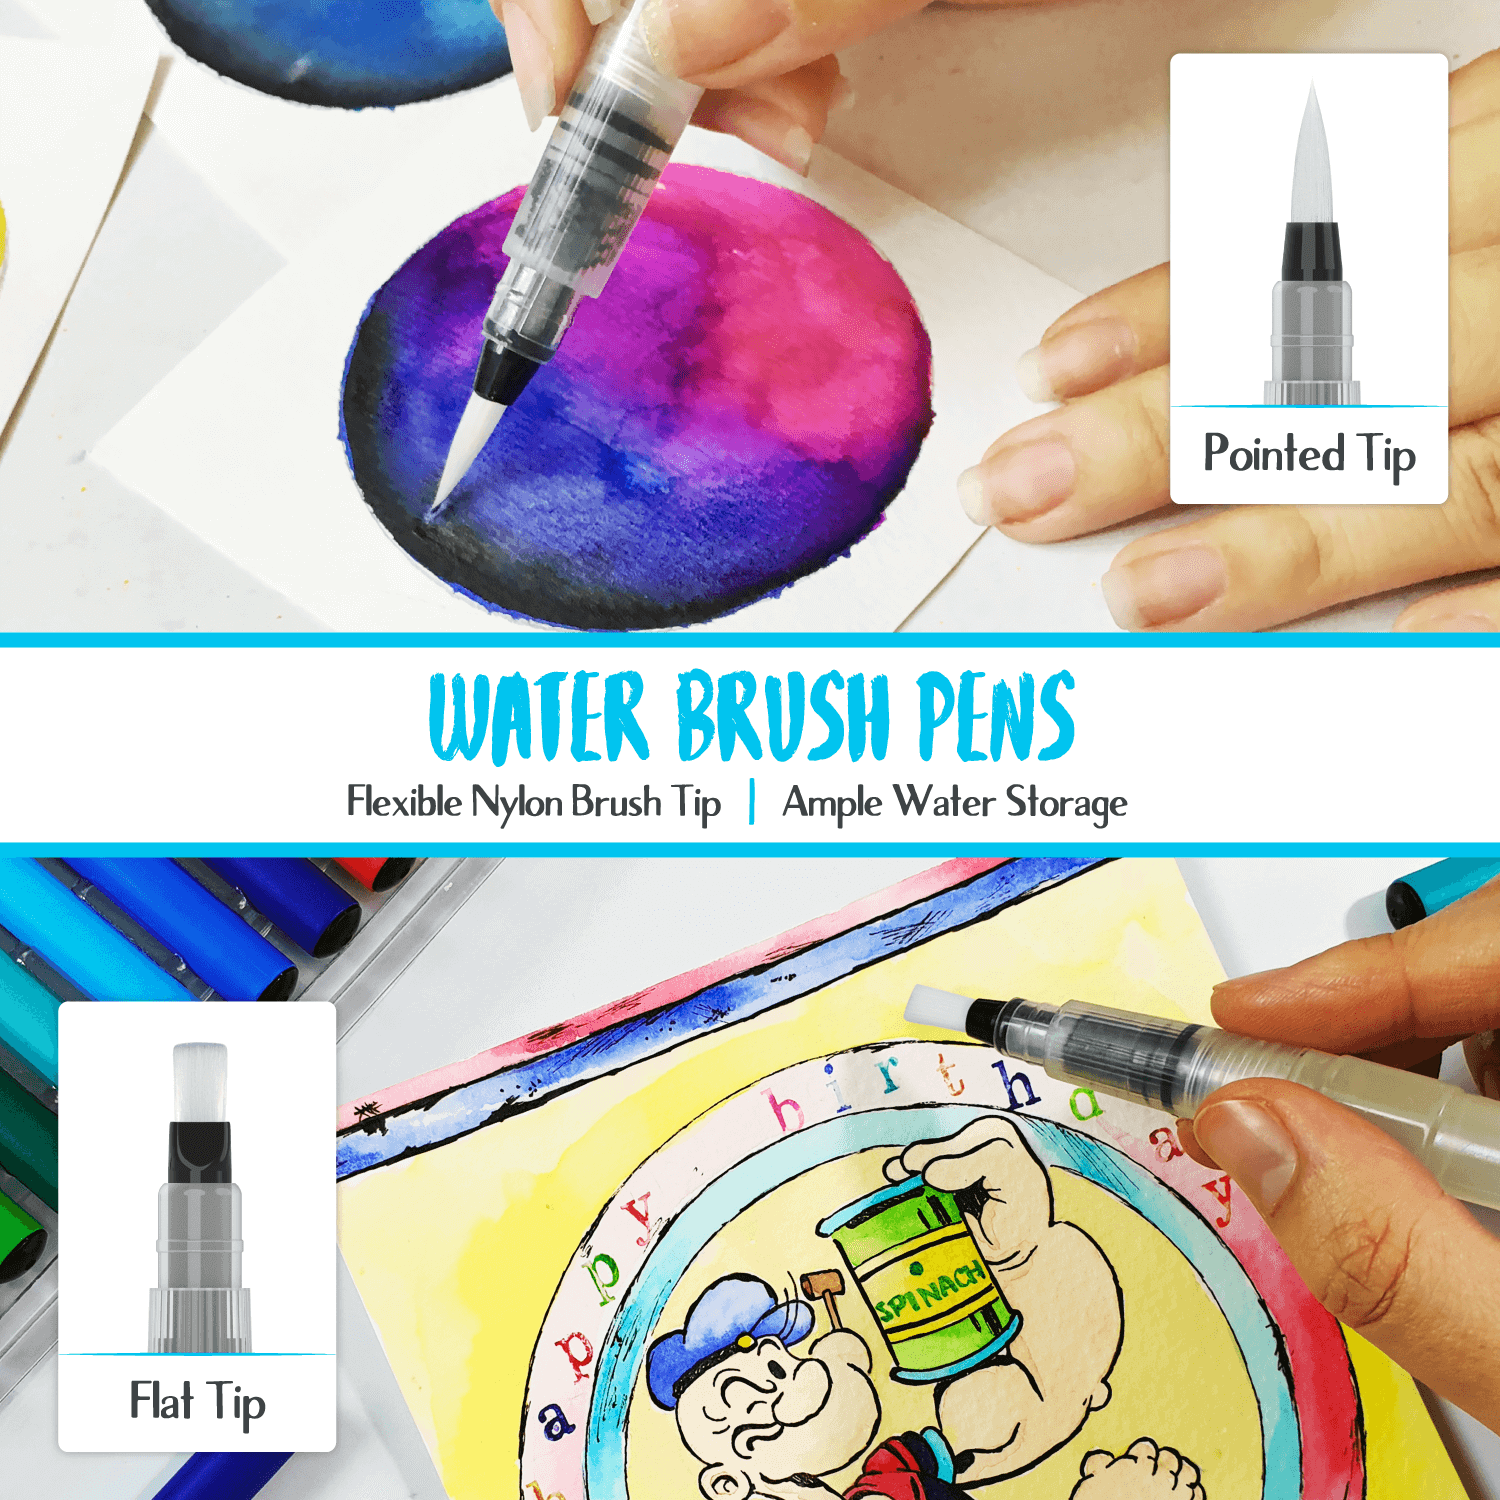 Watercolor Paint Set, 48 Colors of Washable Watercolor Paint Includes Watercolor Palette and 3 Paint Brushes. Great Water Color Kids Paint